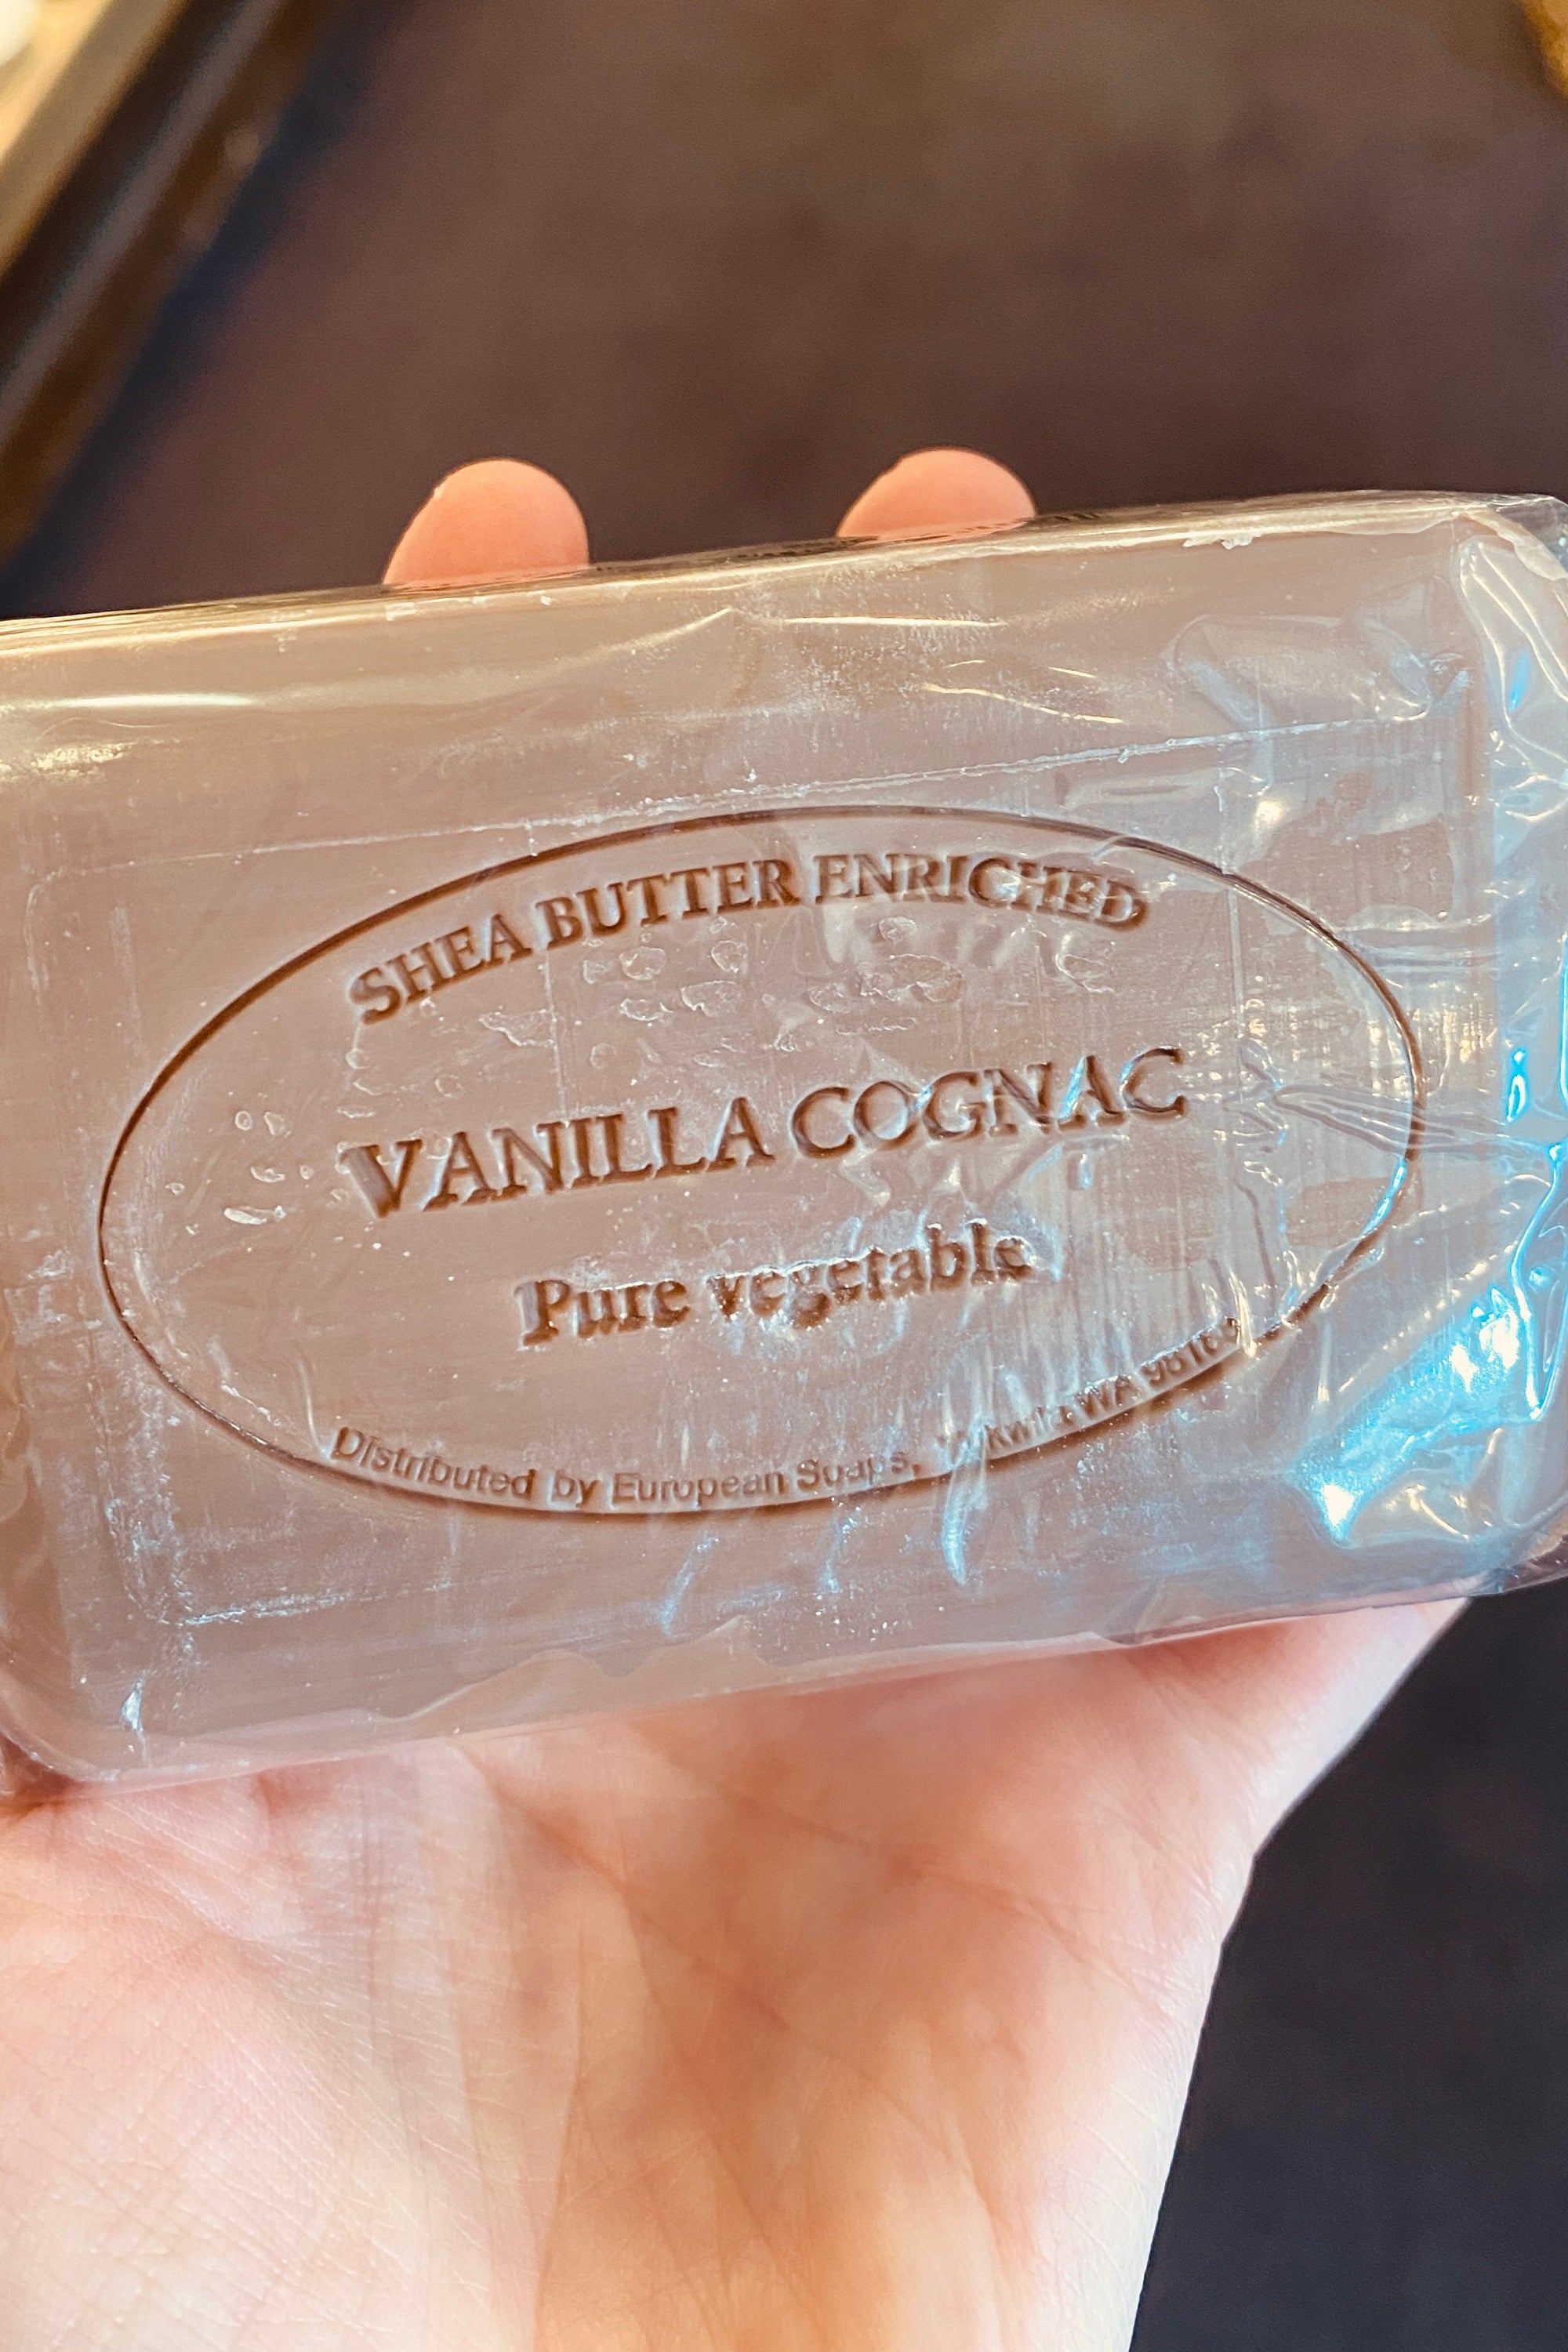 Cognac Vanilla For Men Bar Soap